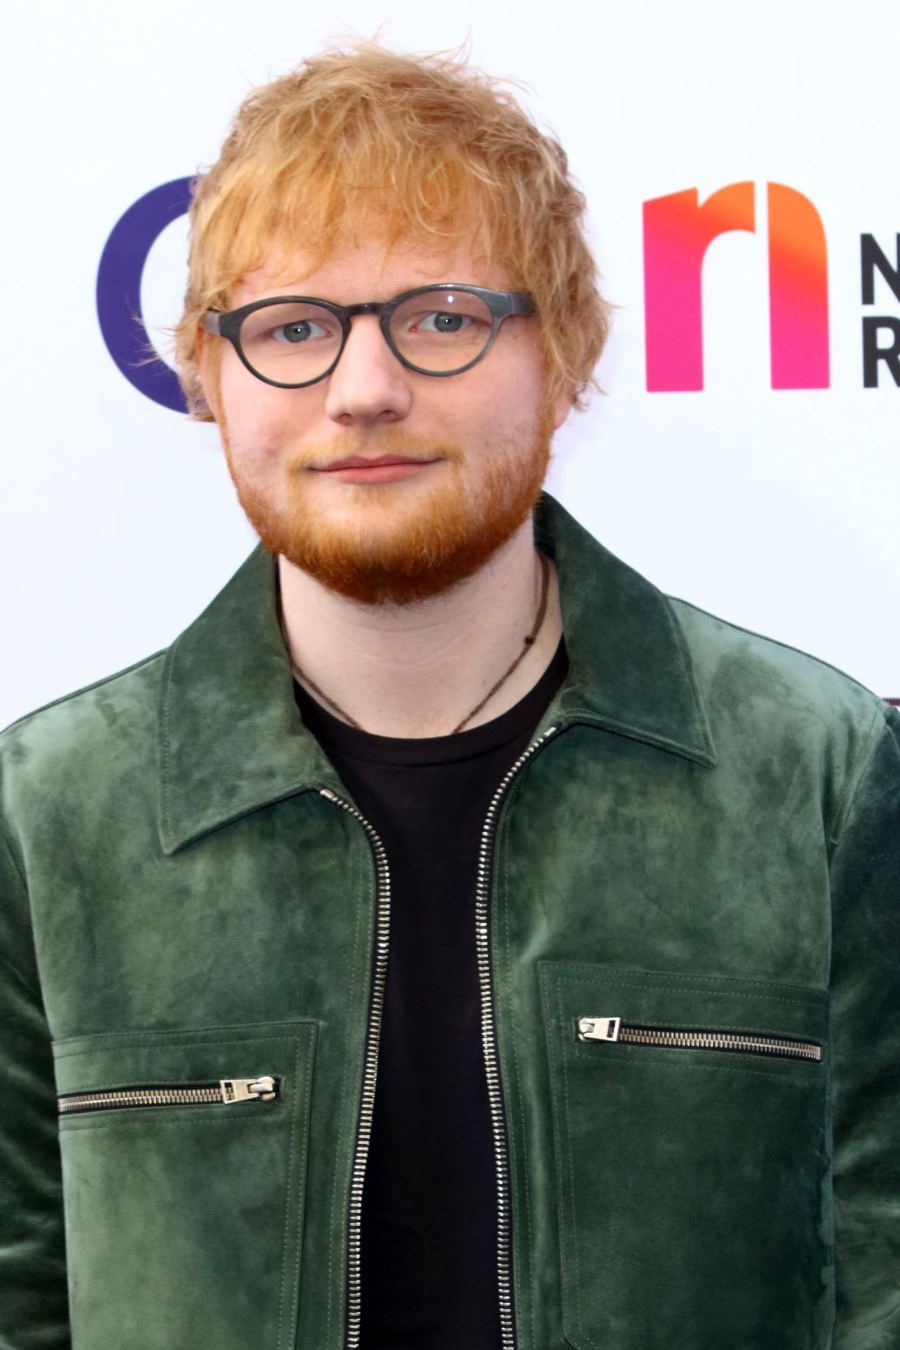 Ed Sheeran Celebs Support Justin Bieber After He Pens Candid Post About Past Drug Use, Struggles